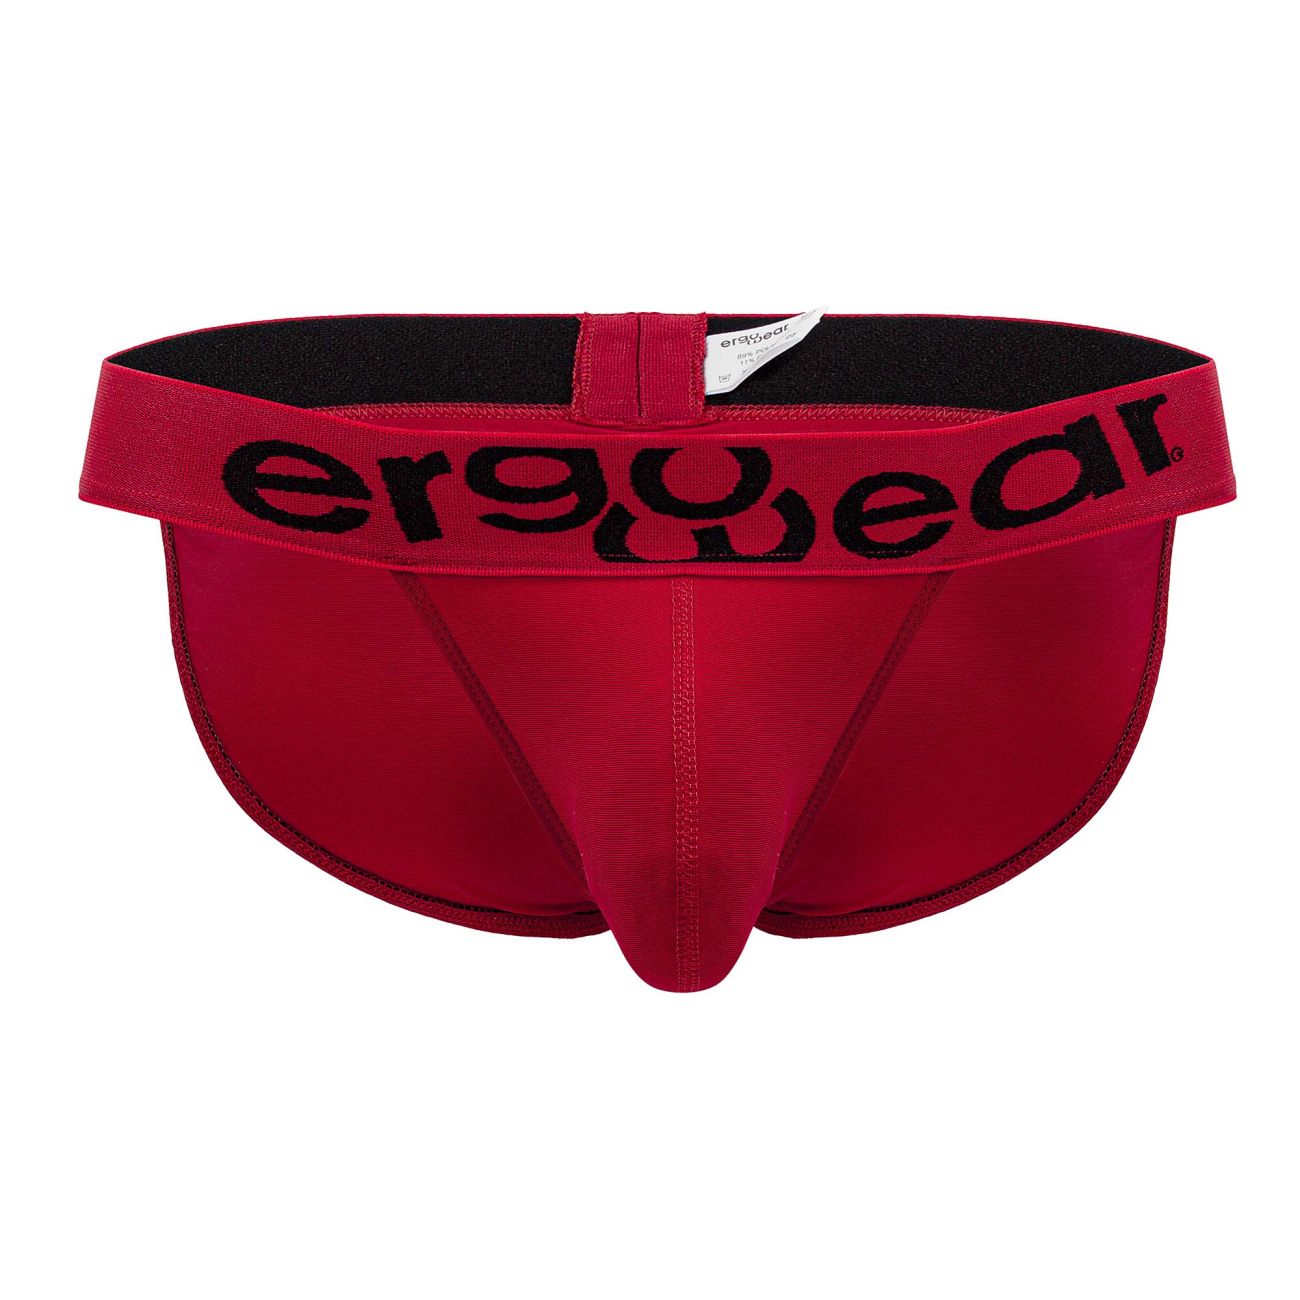 ErgoWear EW1442 MAX SP Bikini Red